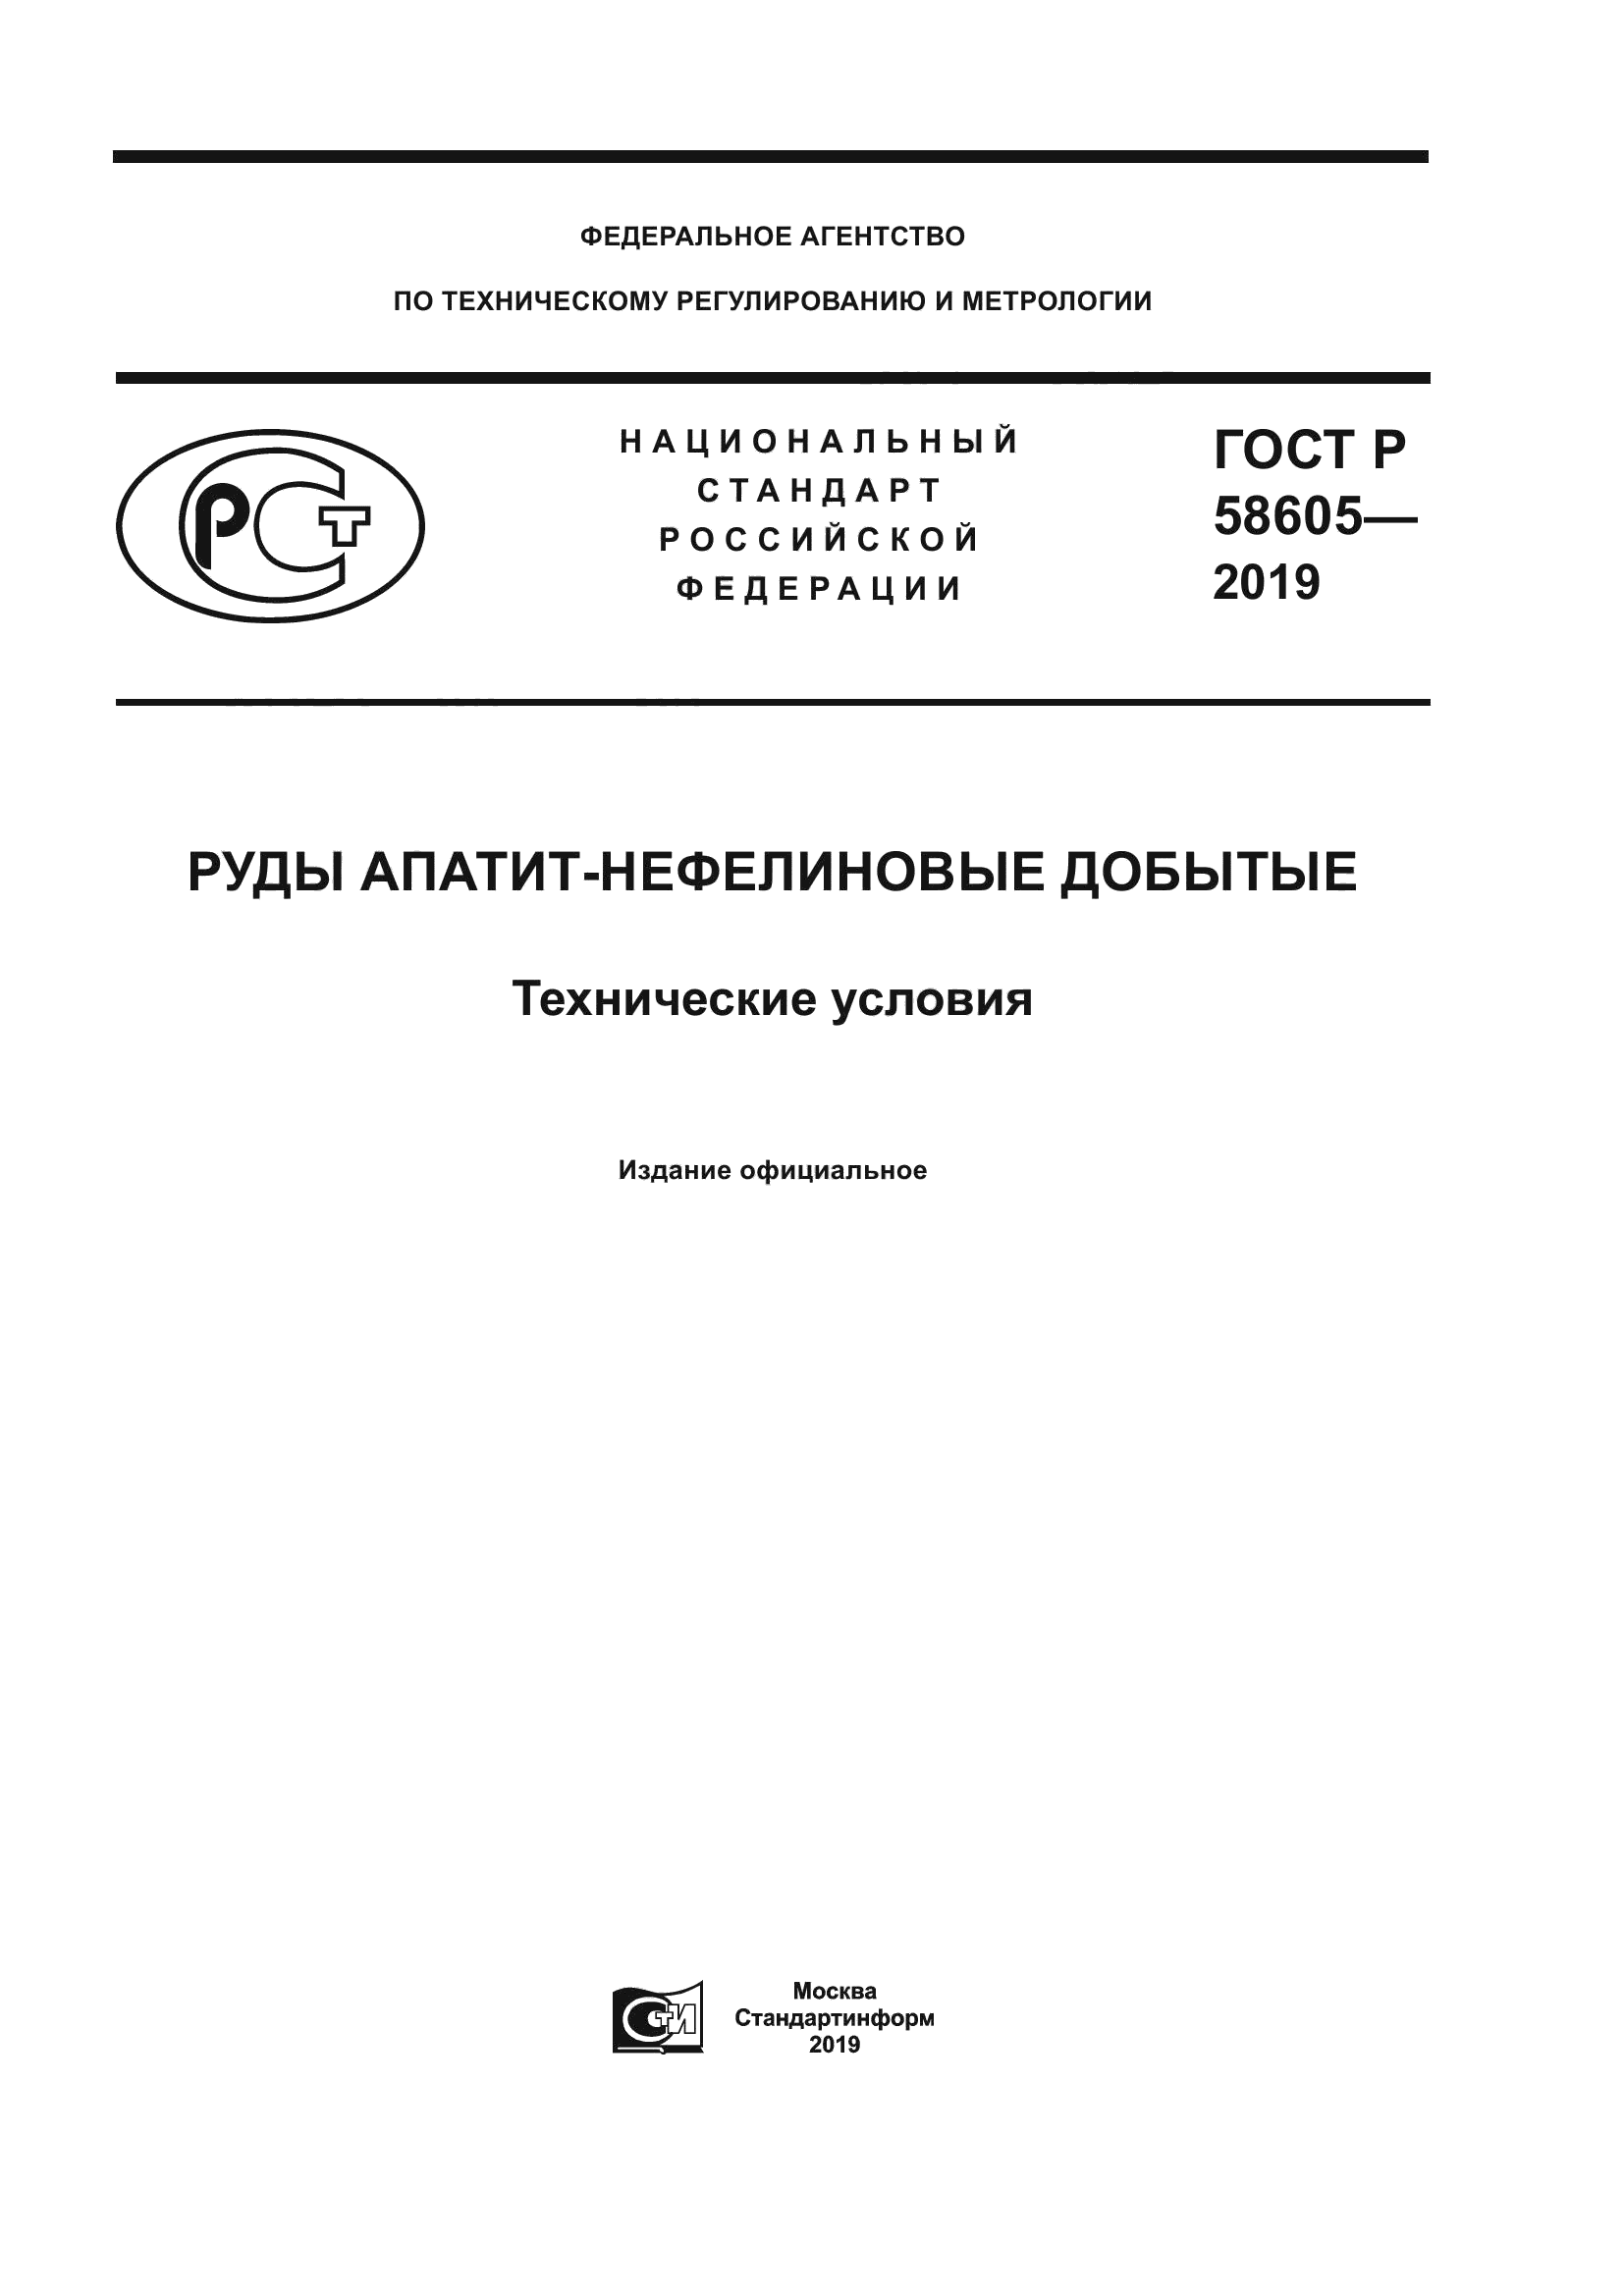 ГОСТ Р 58605-2019